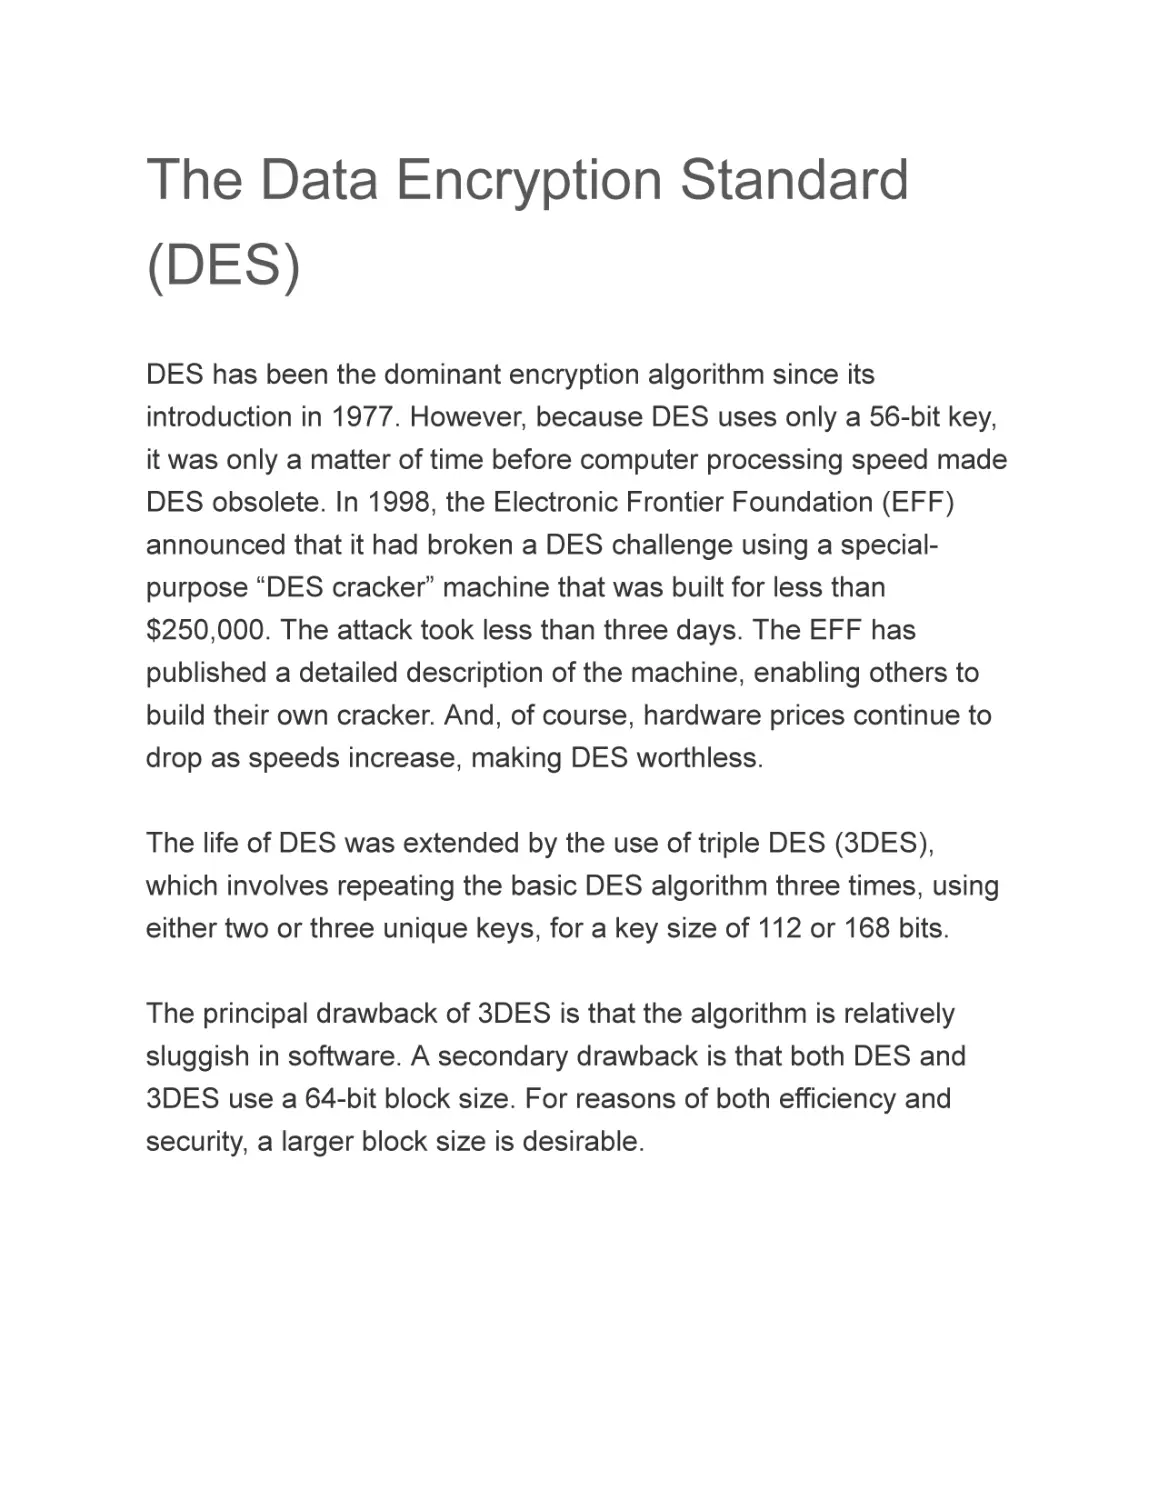 The Data Encryption Standard (DES)